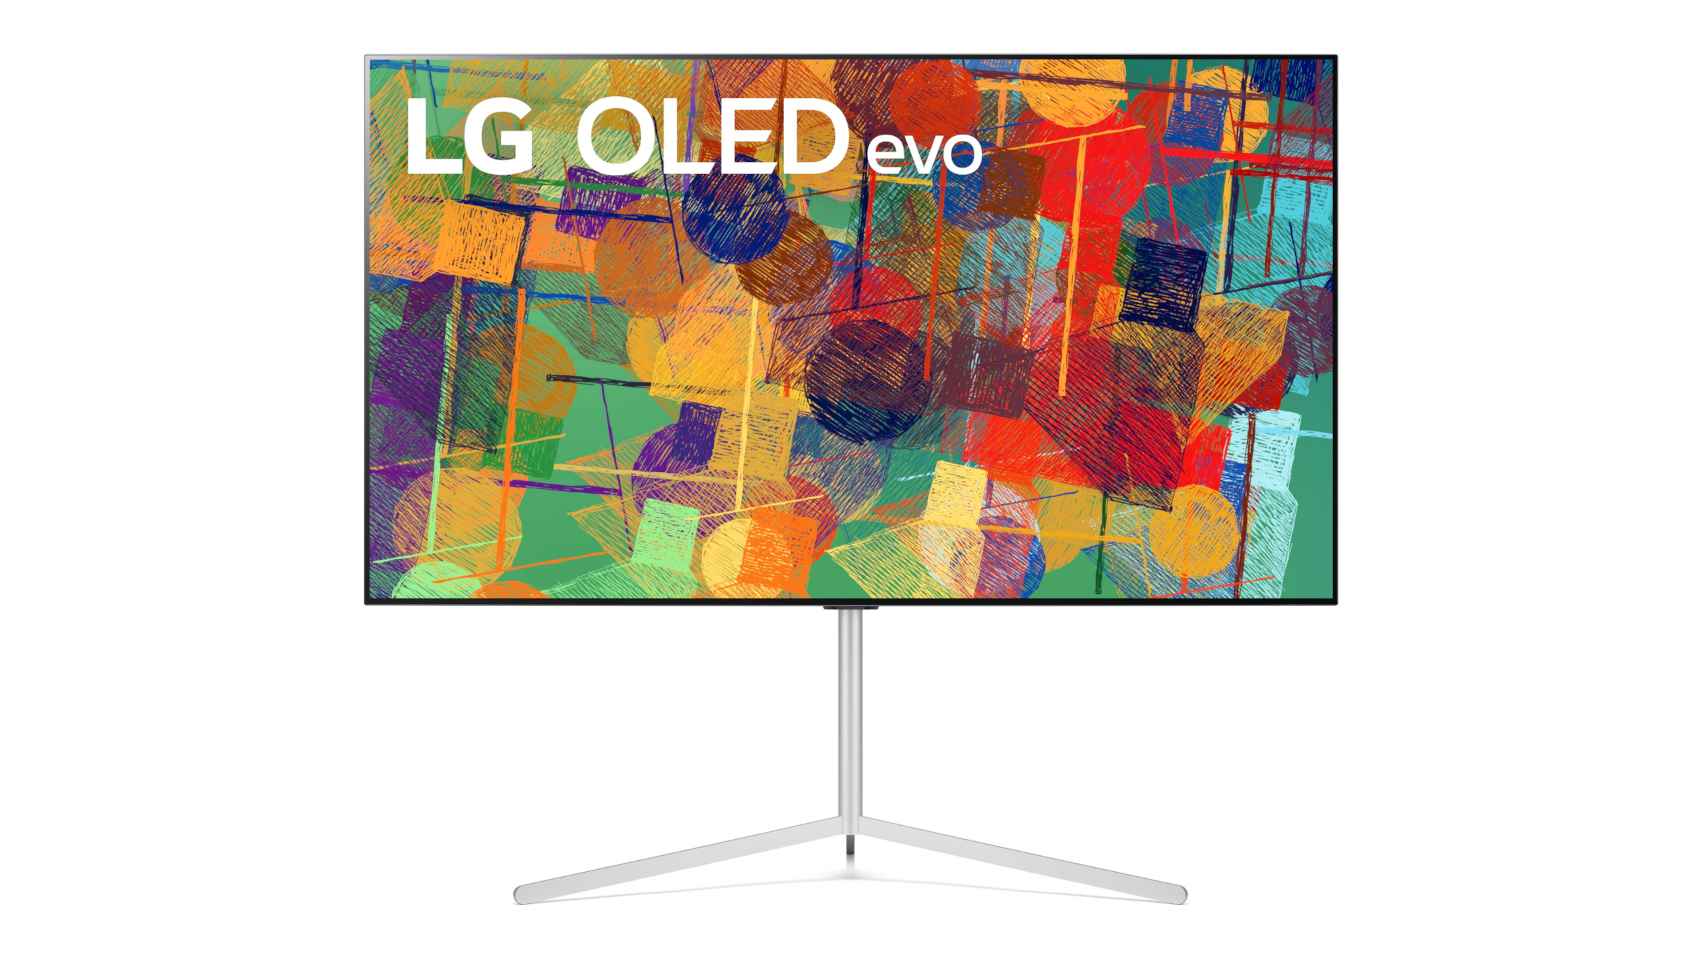 Nuevo televisor LG OLED evo.